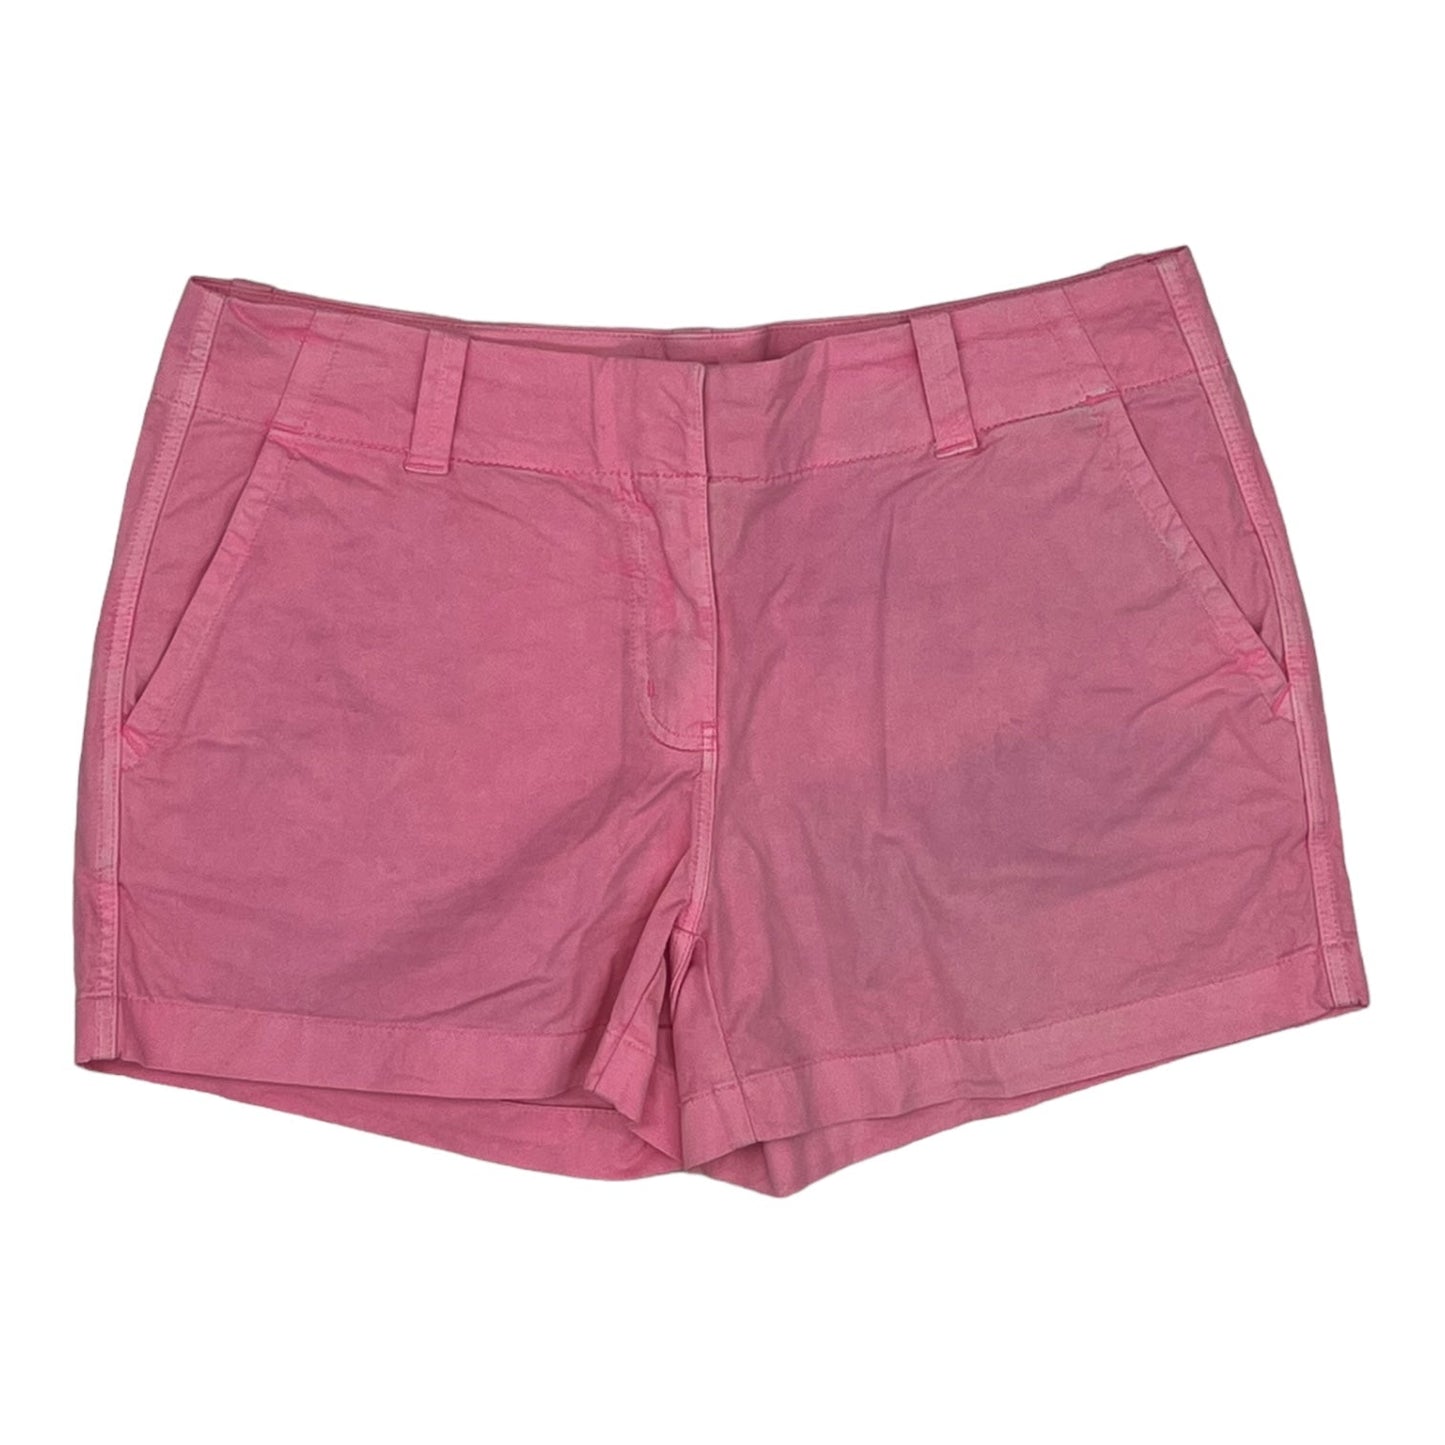 Pink Shorts Vineyard Vines, Size 6